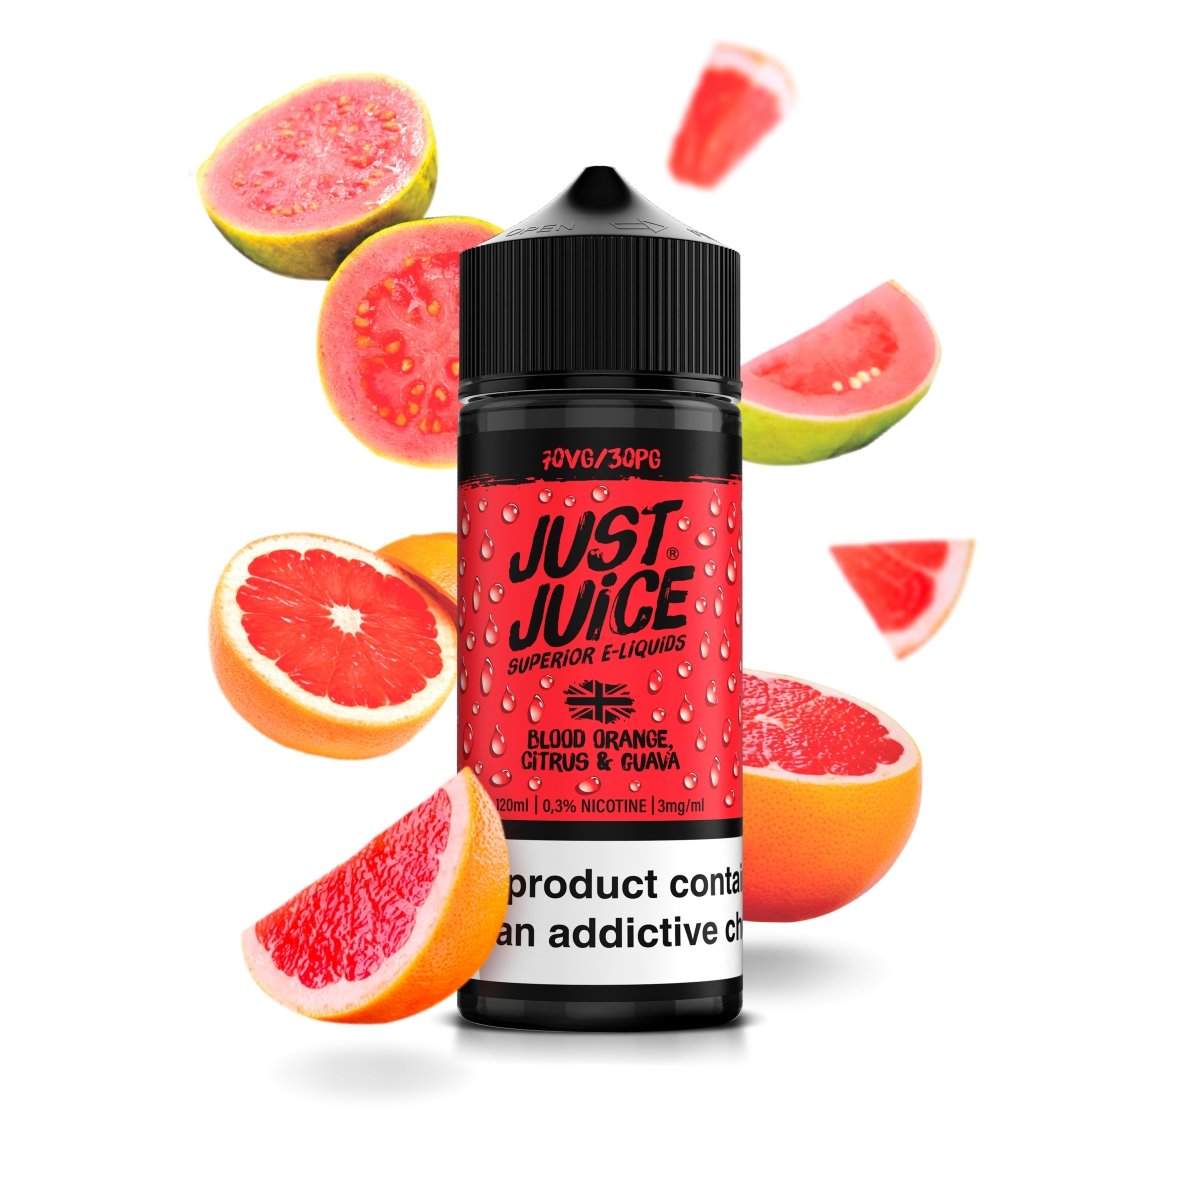 Blood Orange Citrus & Guava - Eliquid - Just Juice | BL-JJ-BOCG-03